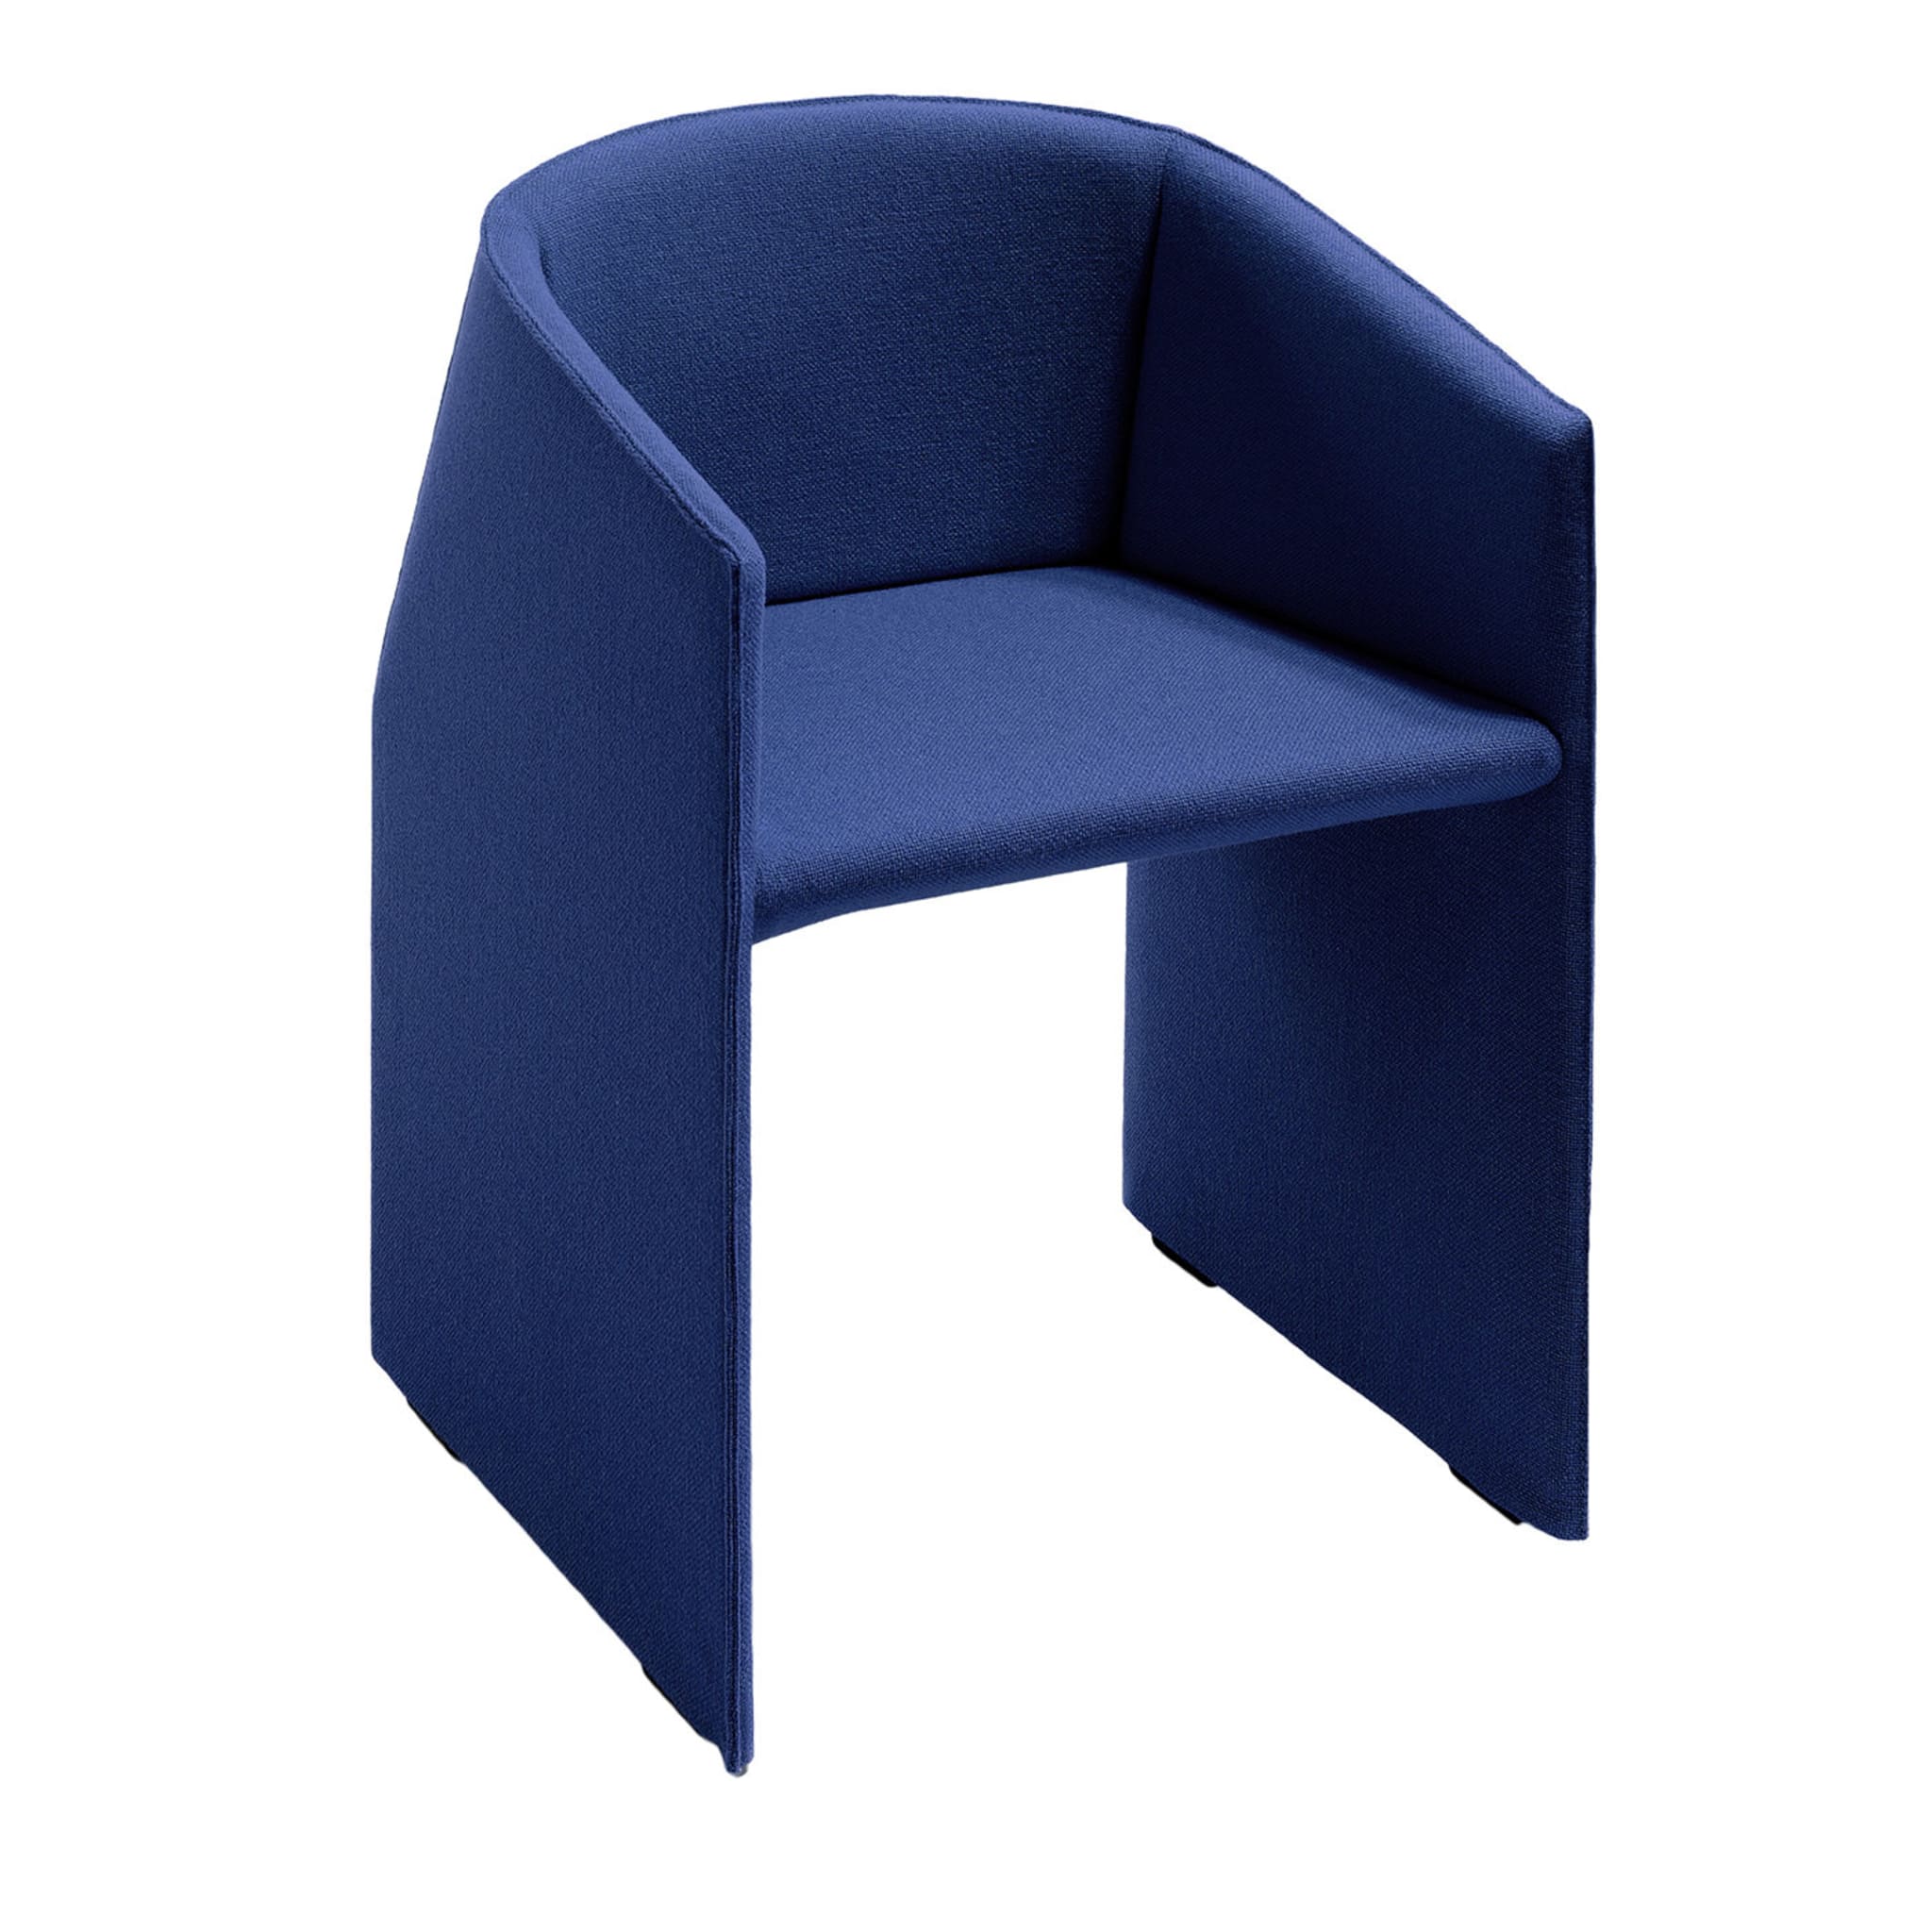 Plau Blue Tall on feet chair by Gabriele and Oscar Buratti - Main view